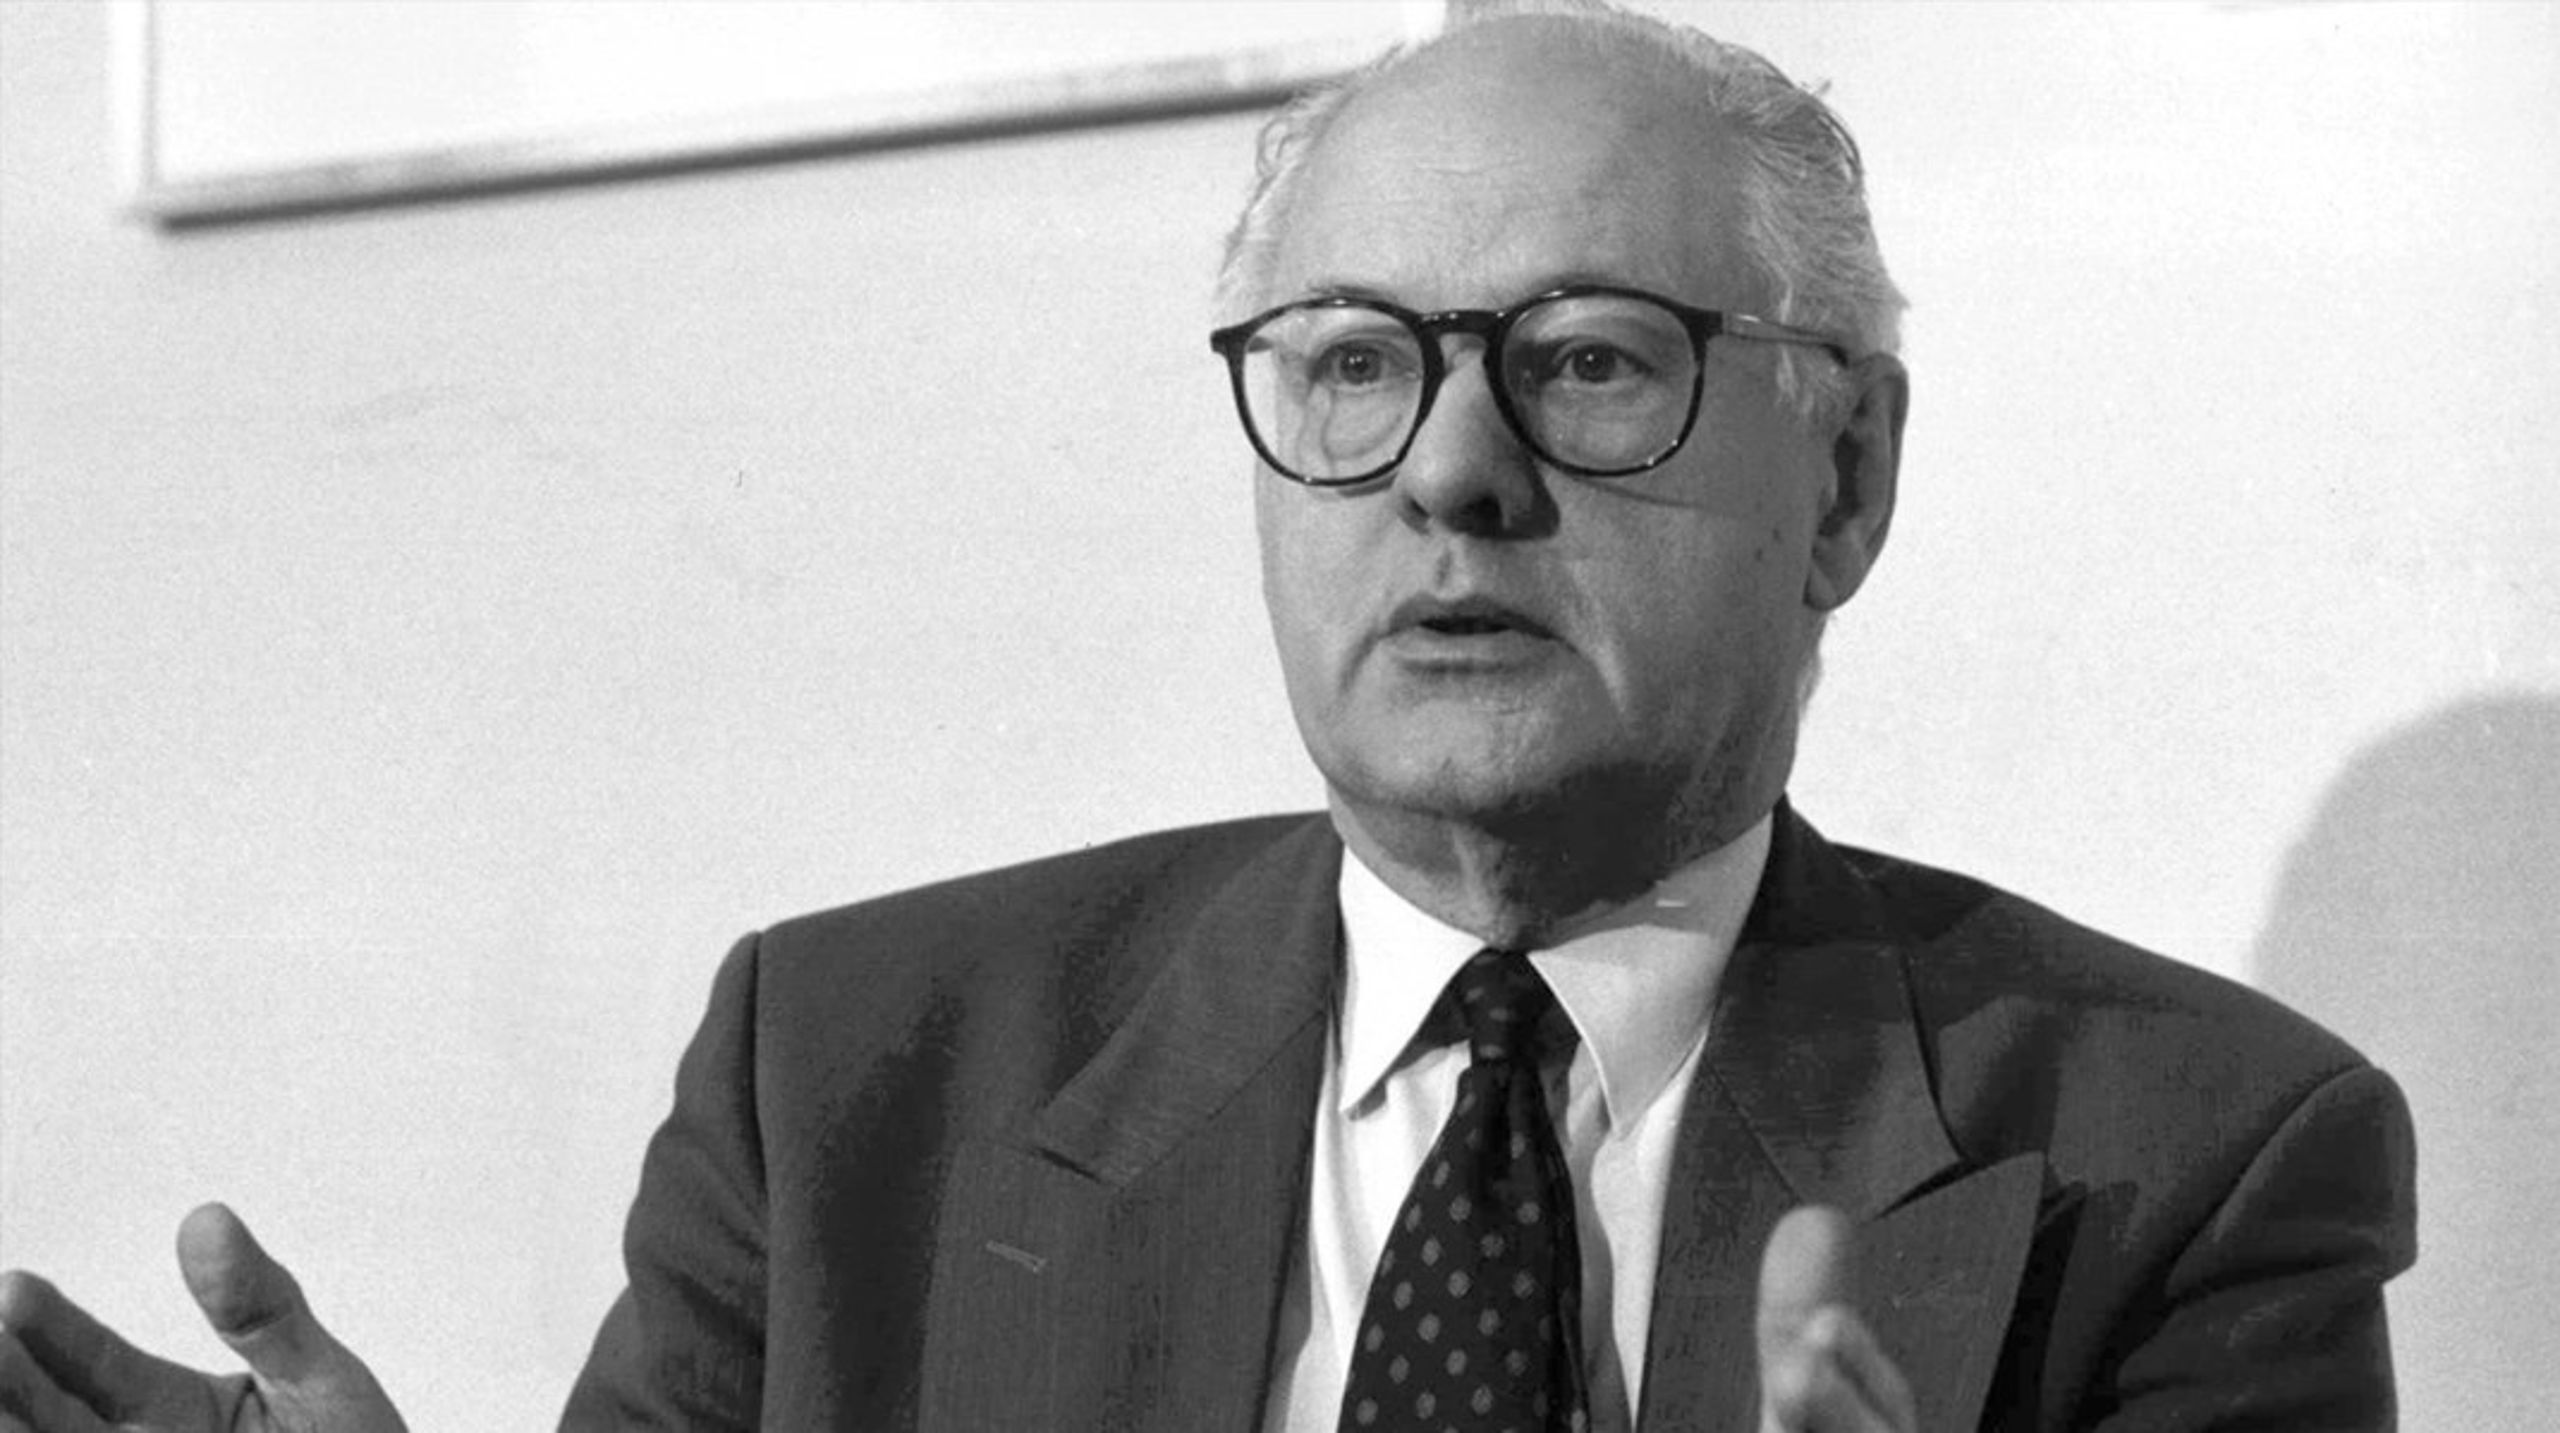 Fra 1978-1993 stod&nbsp;Knud Enggaard i spidsen for flere ministerier under Anker Jørgensen (S) og senere&nbsp;Poul Schlüter (K).